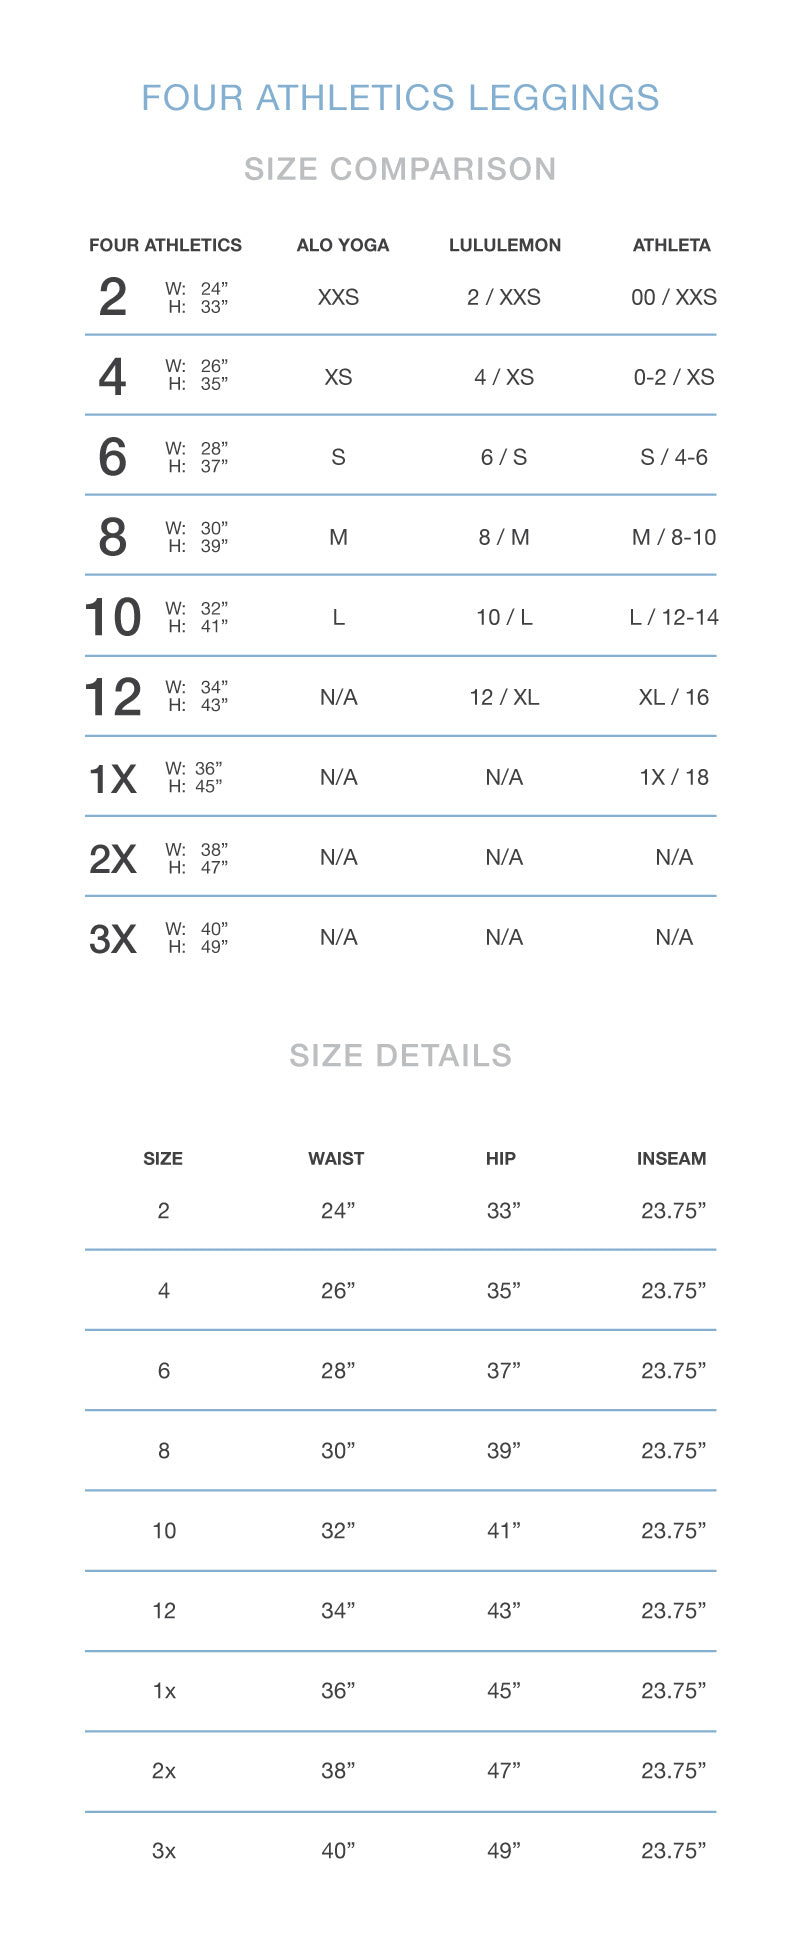 Size Chart - 90 Degree by Reflex Sizing Information